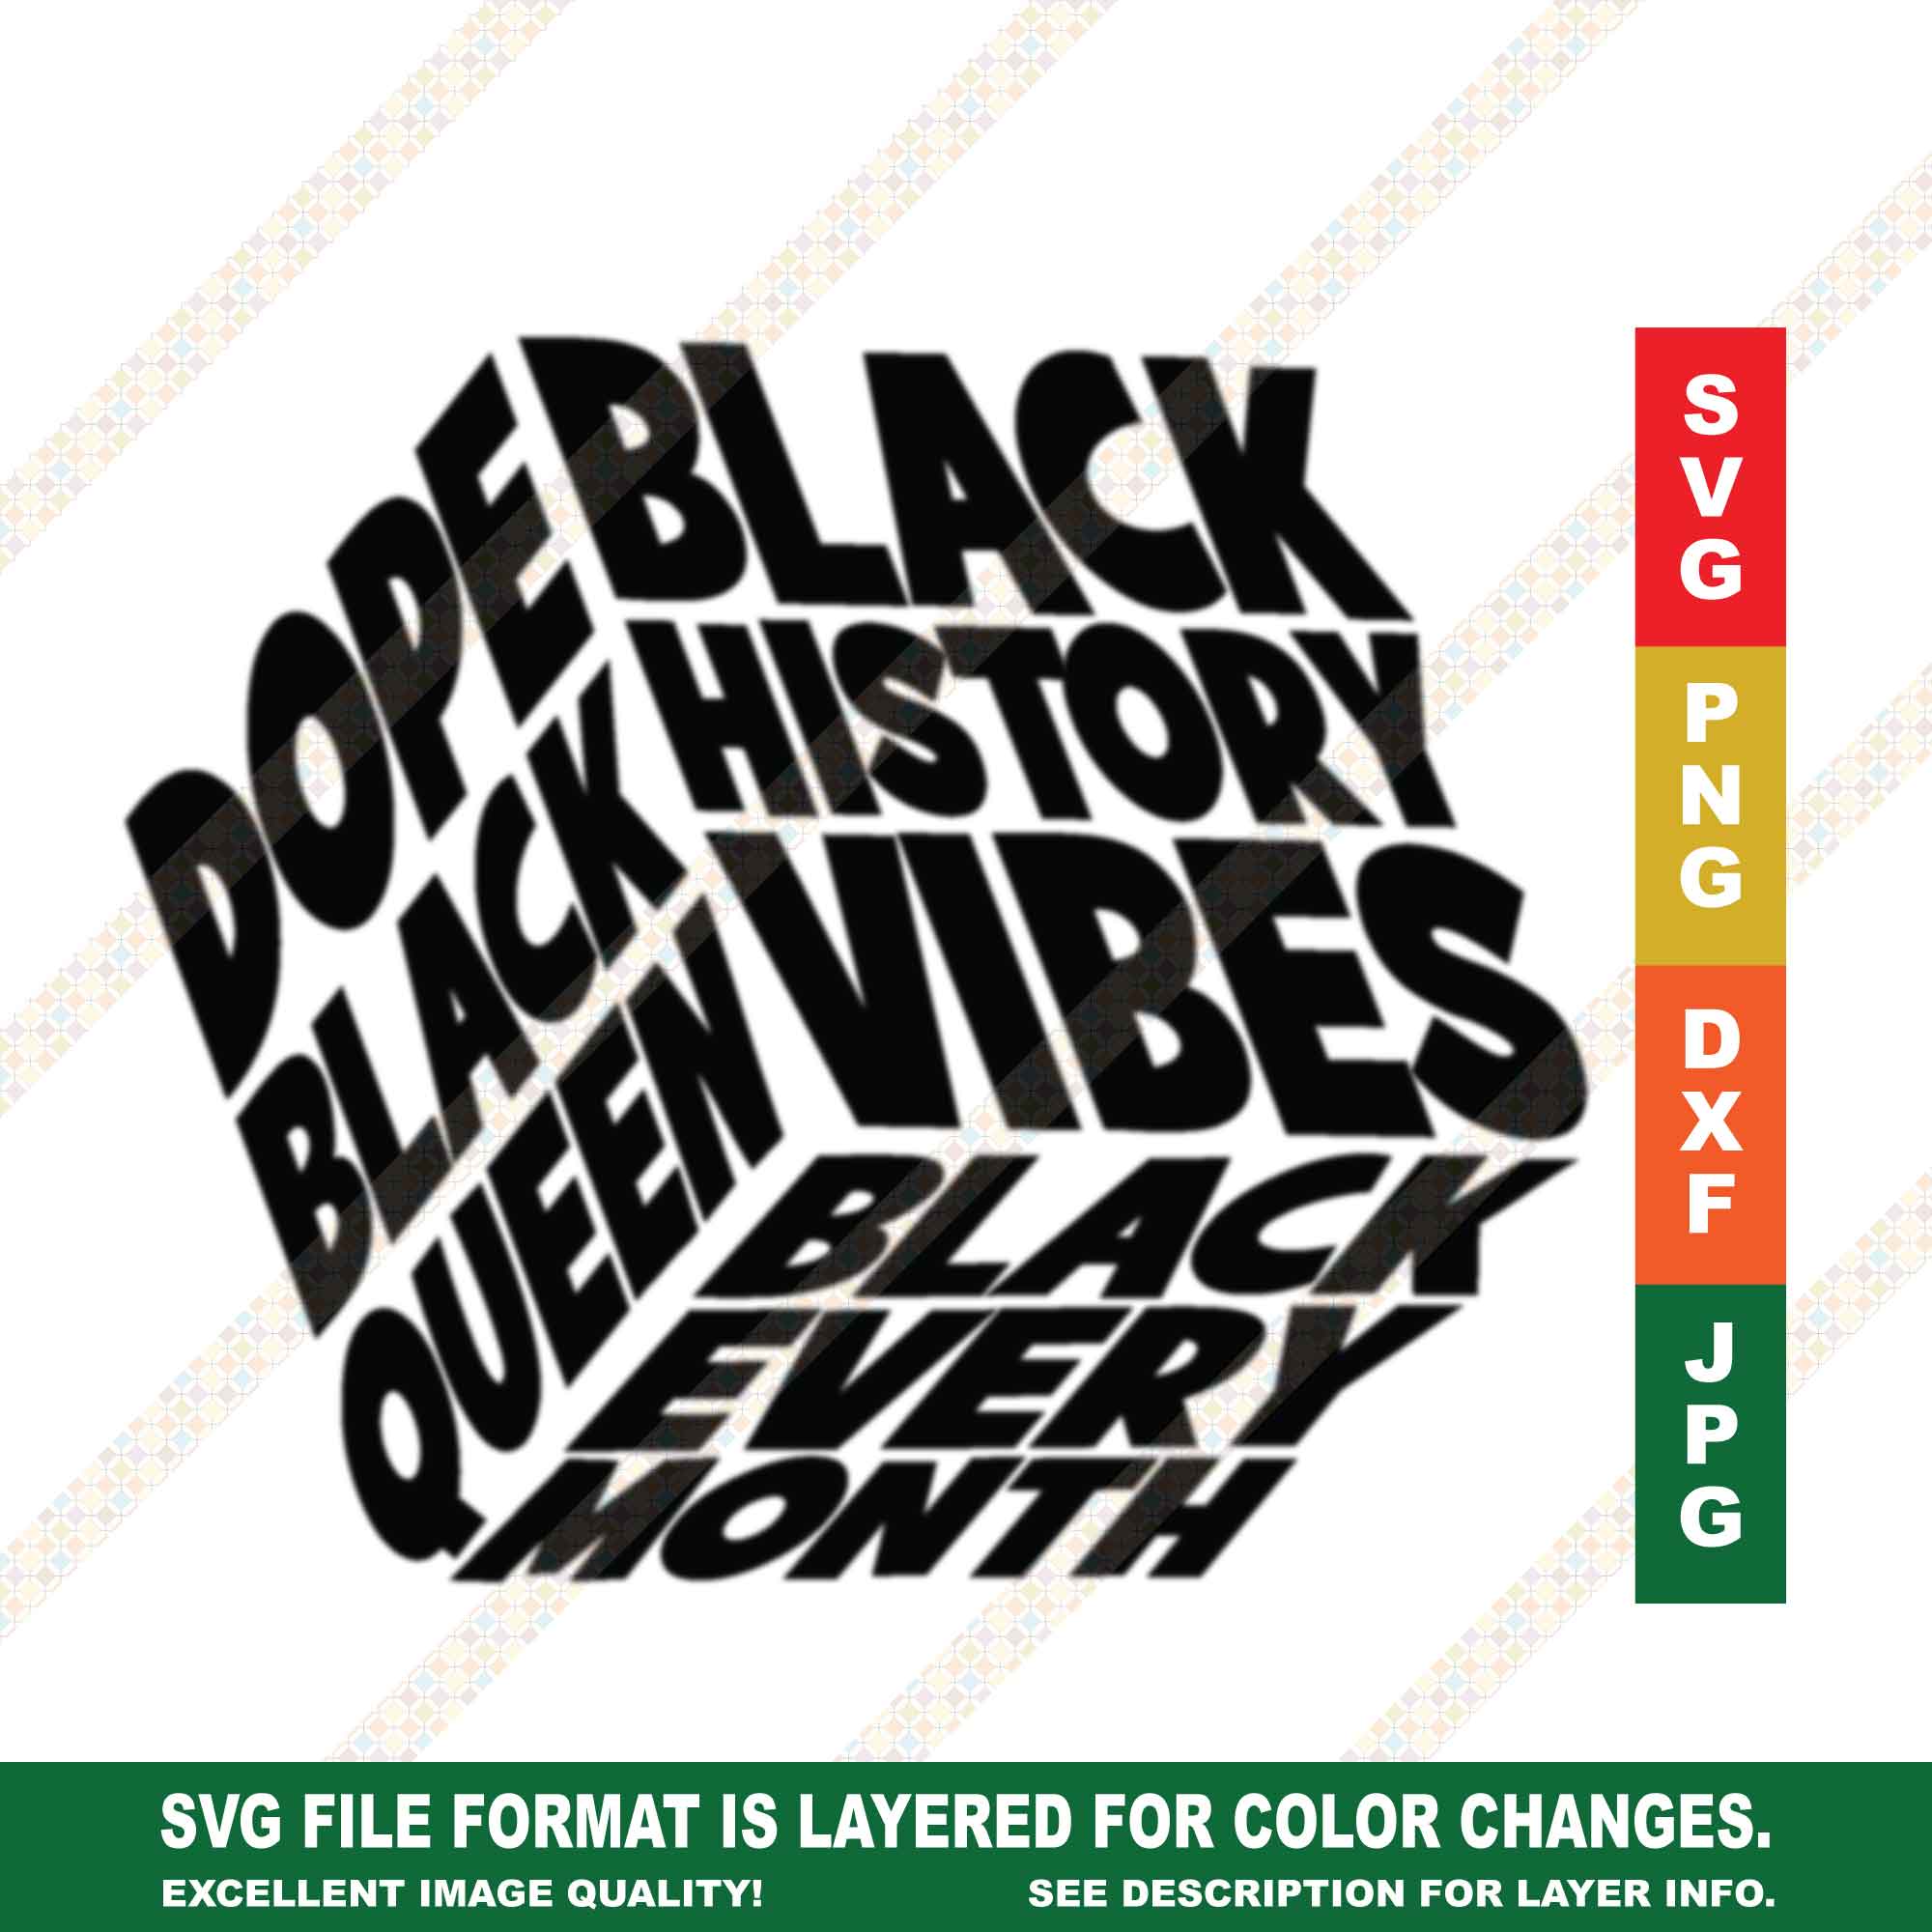 Black History Month Cube SVG